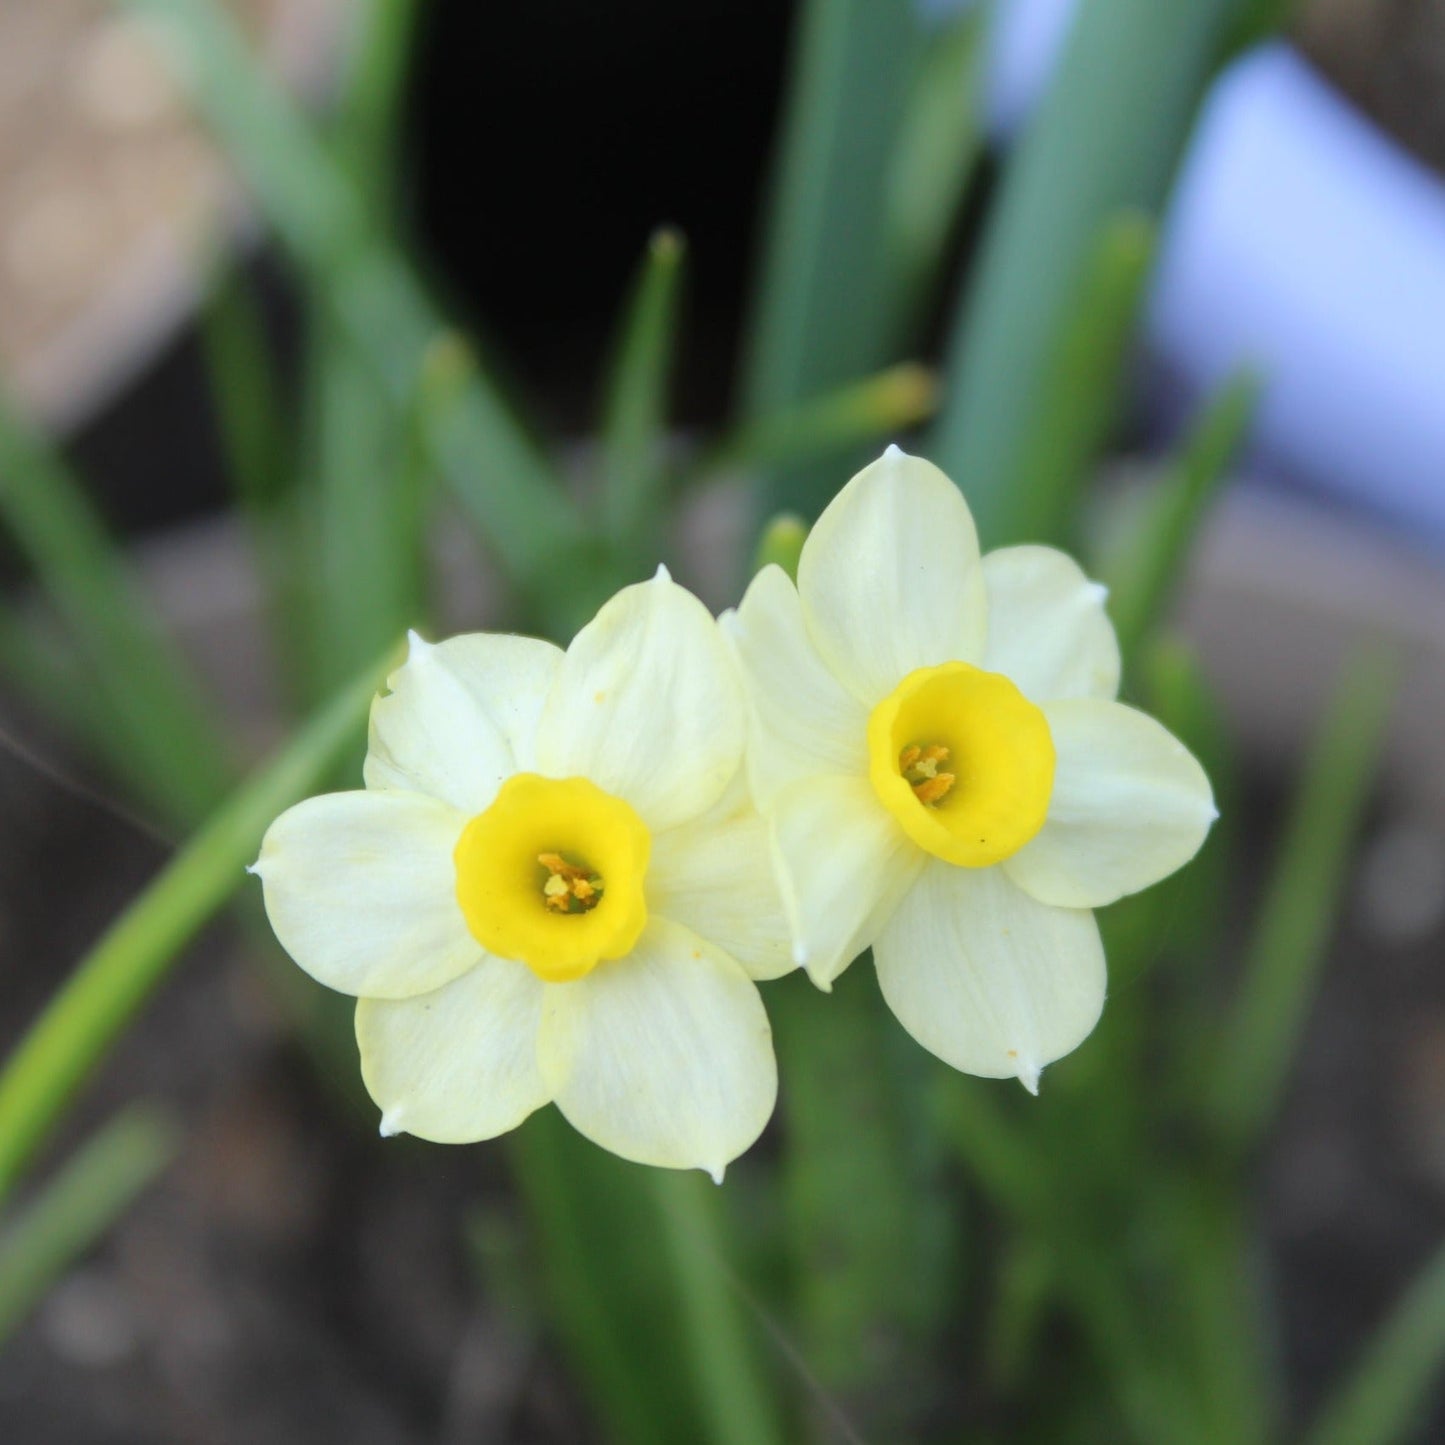 Spring Bulb Planters - Fernwood & Co